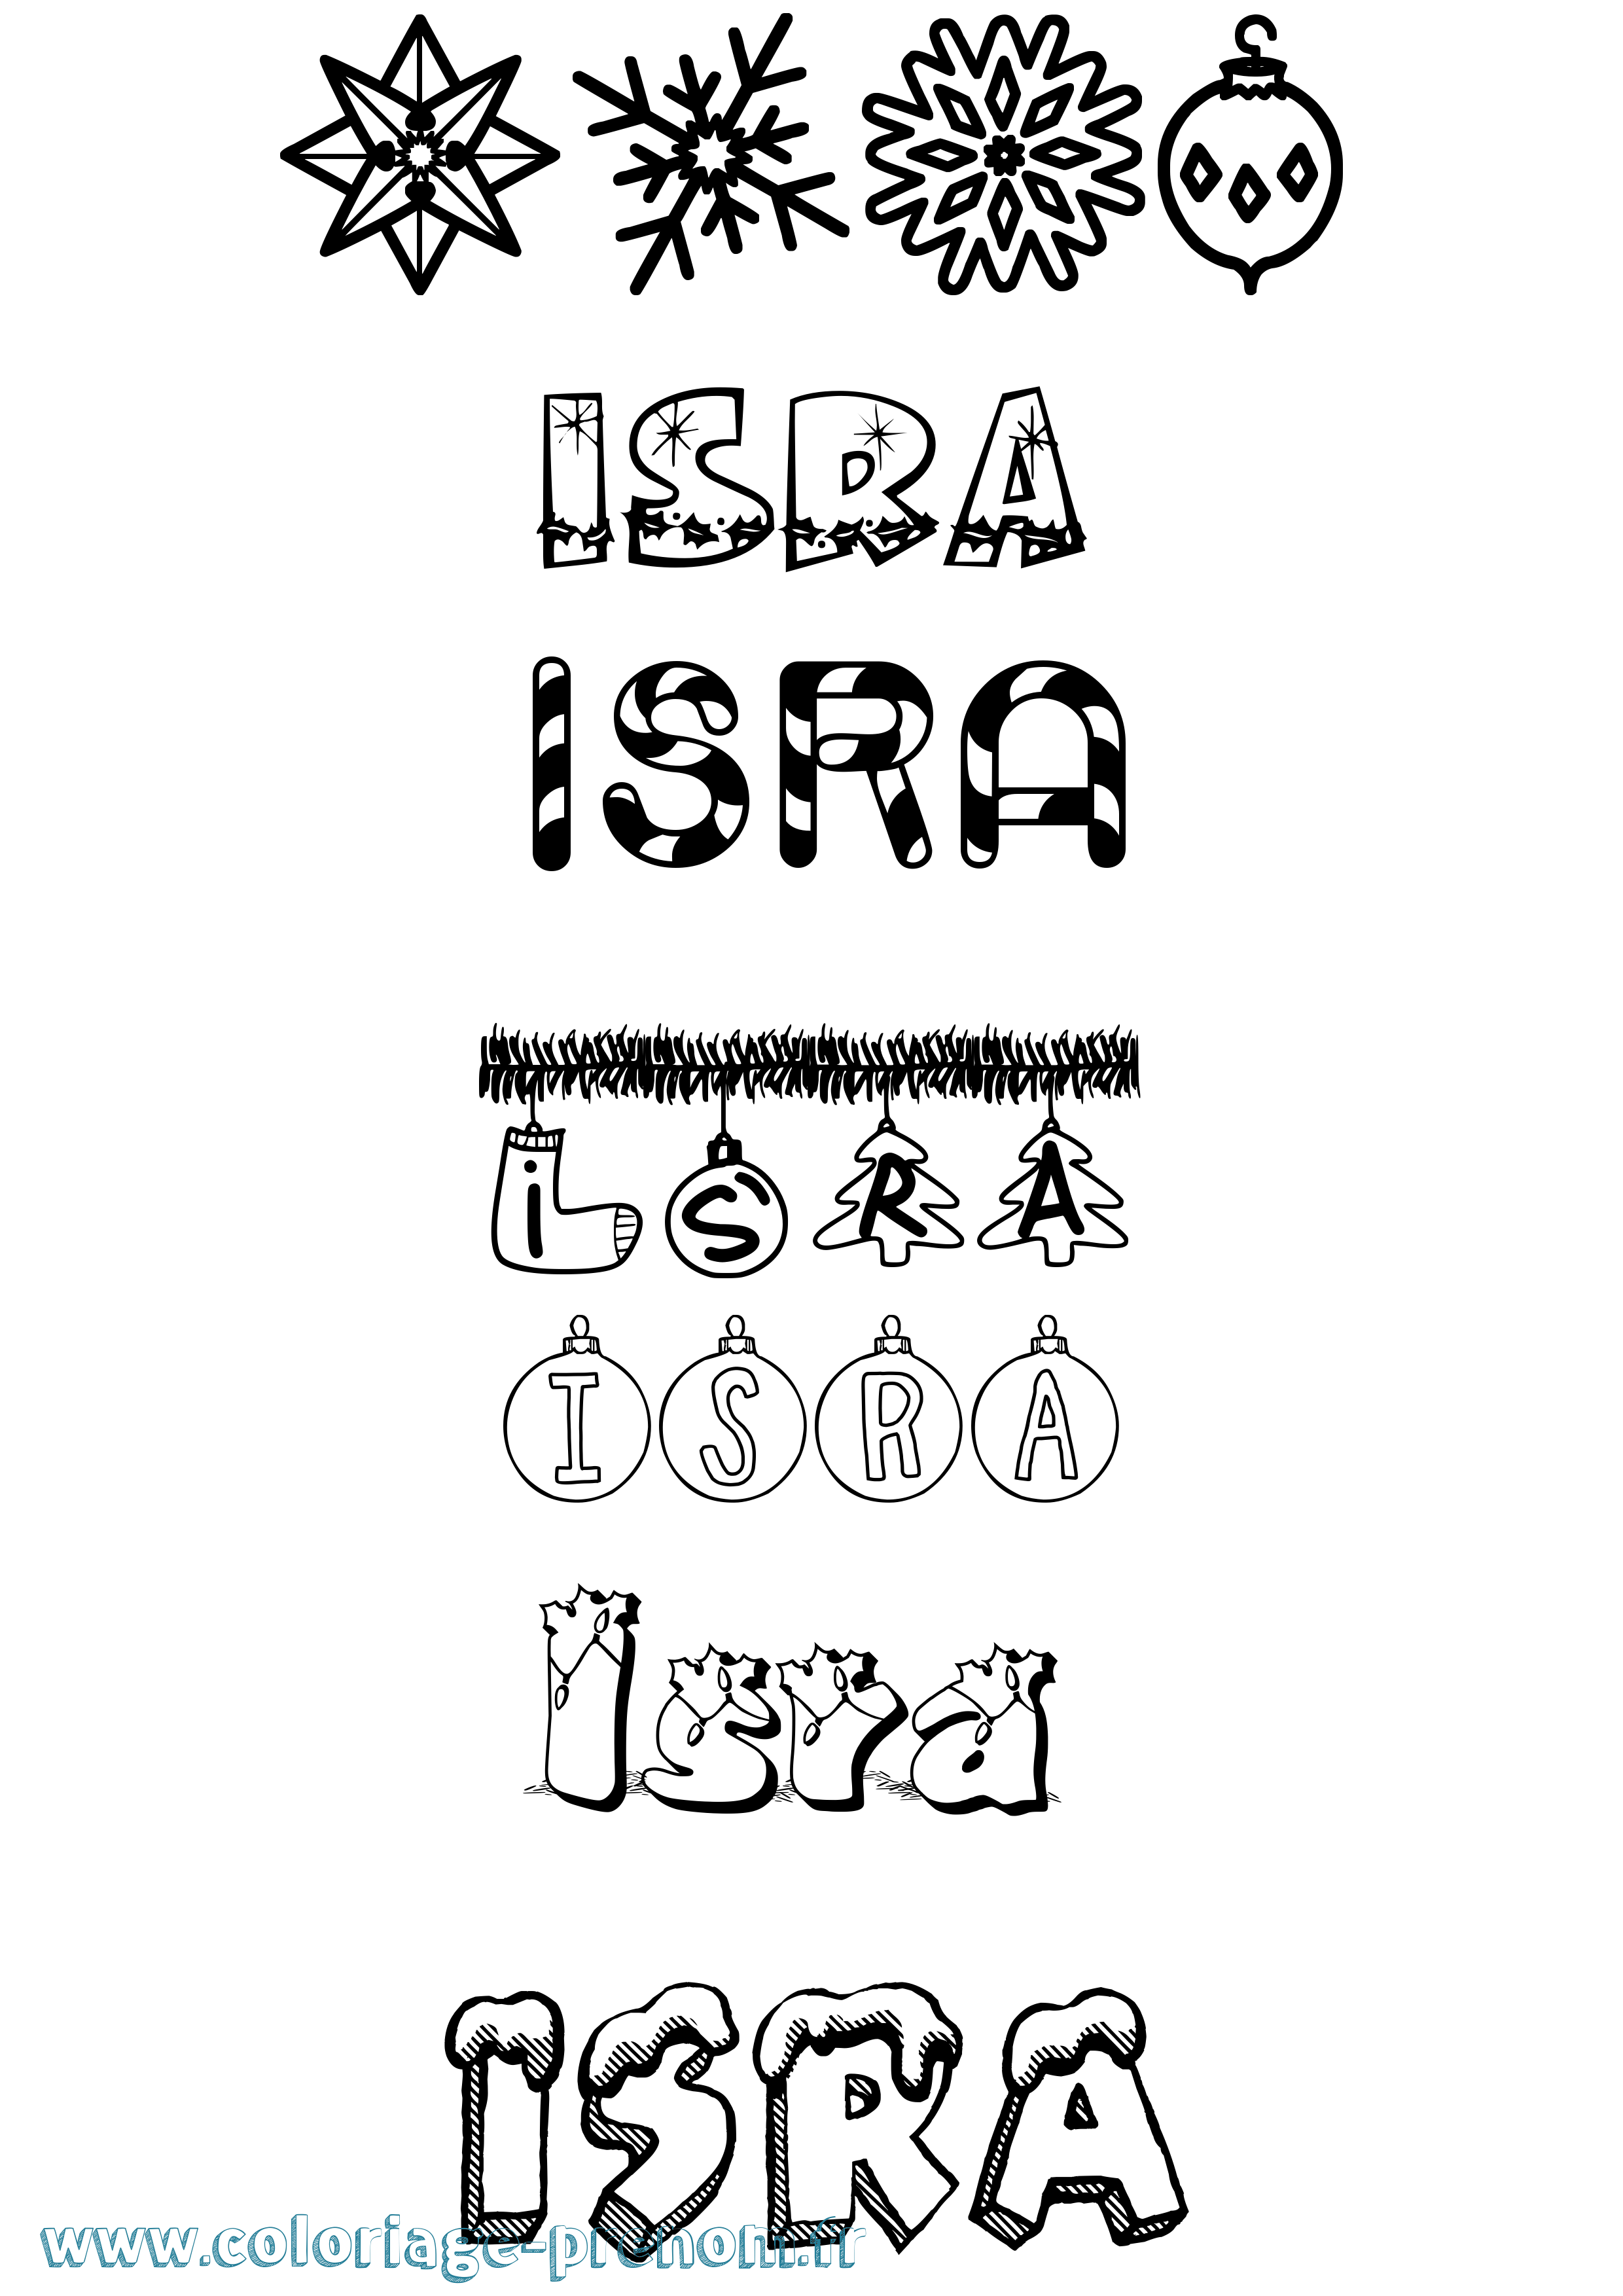 Coloriage prénom Isra